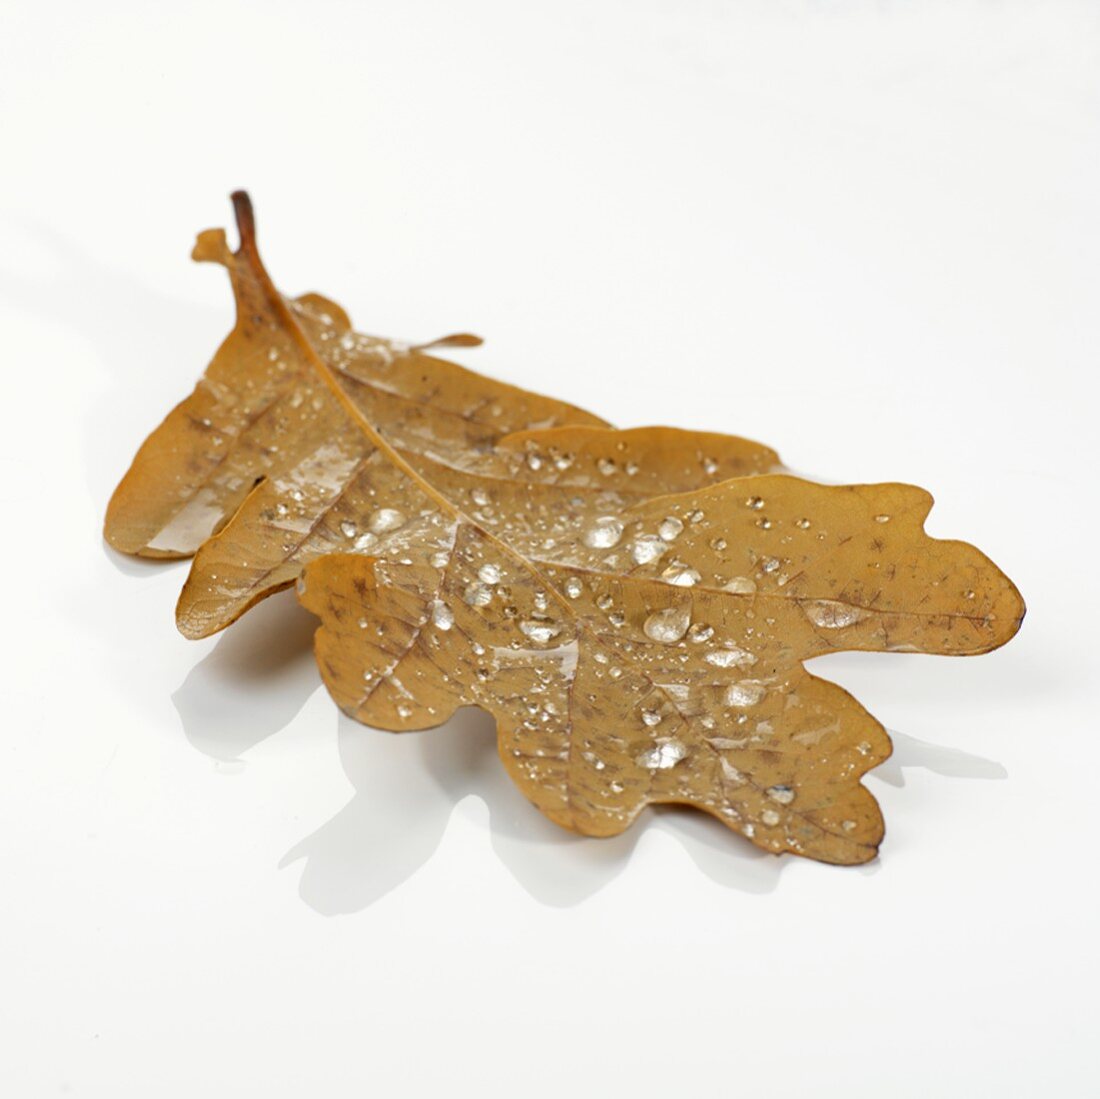 An oak leaf with dewdrops